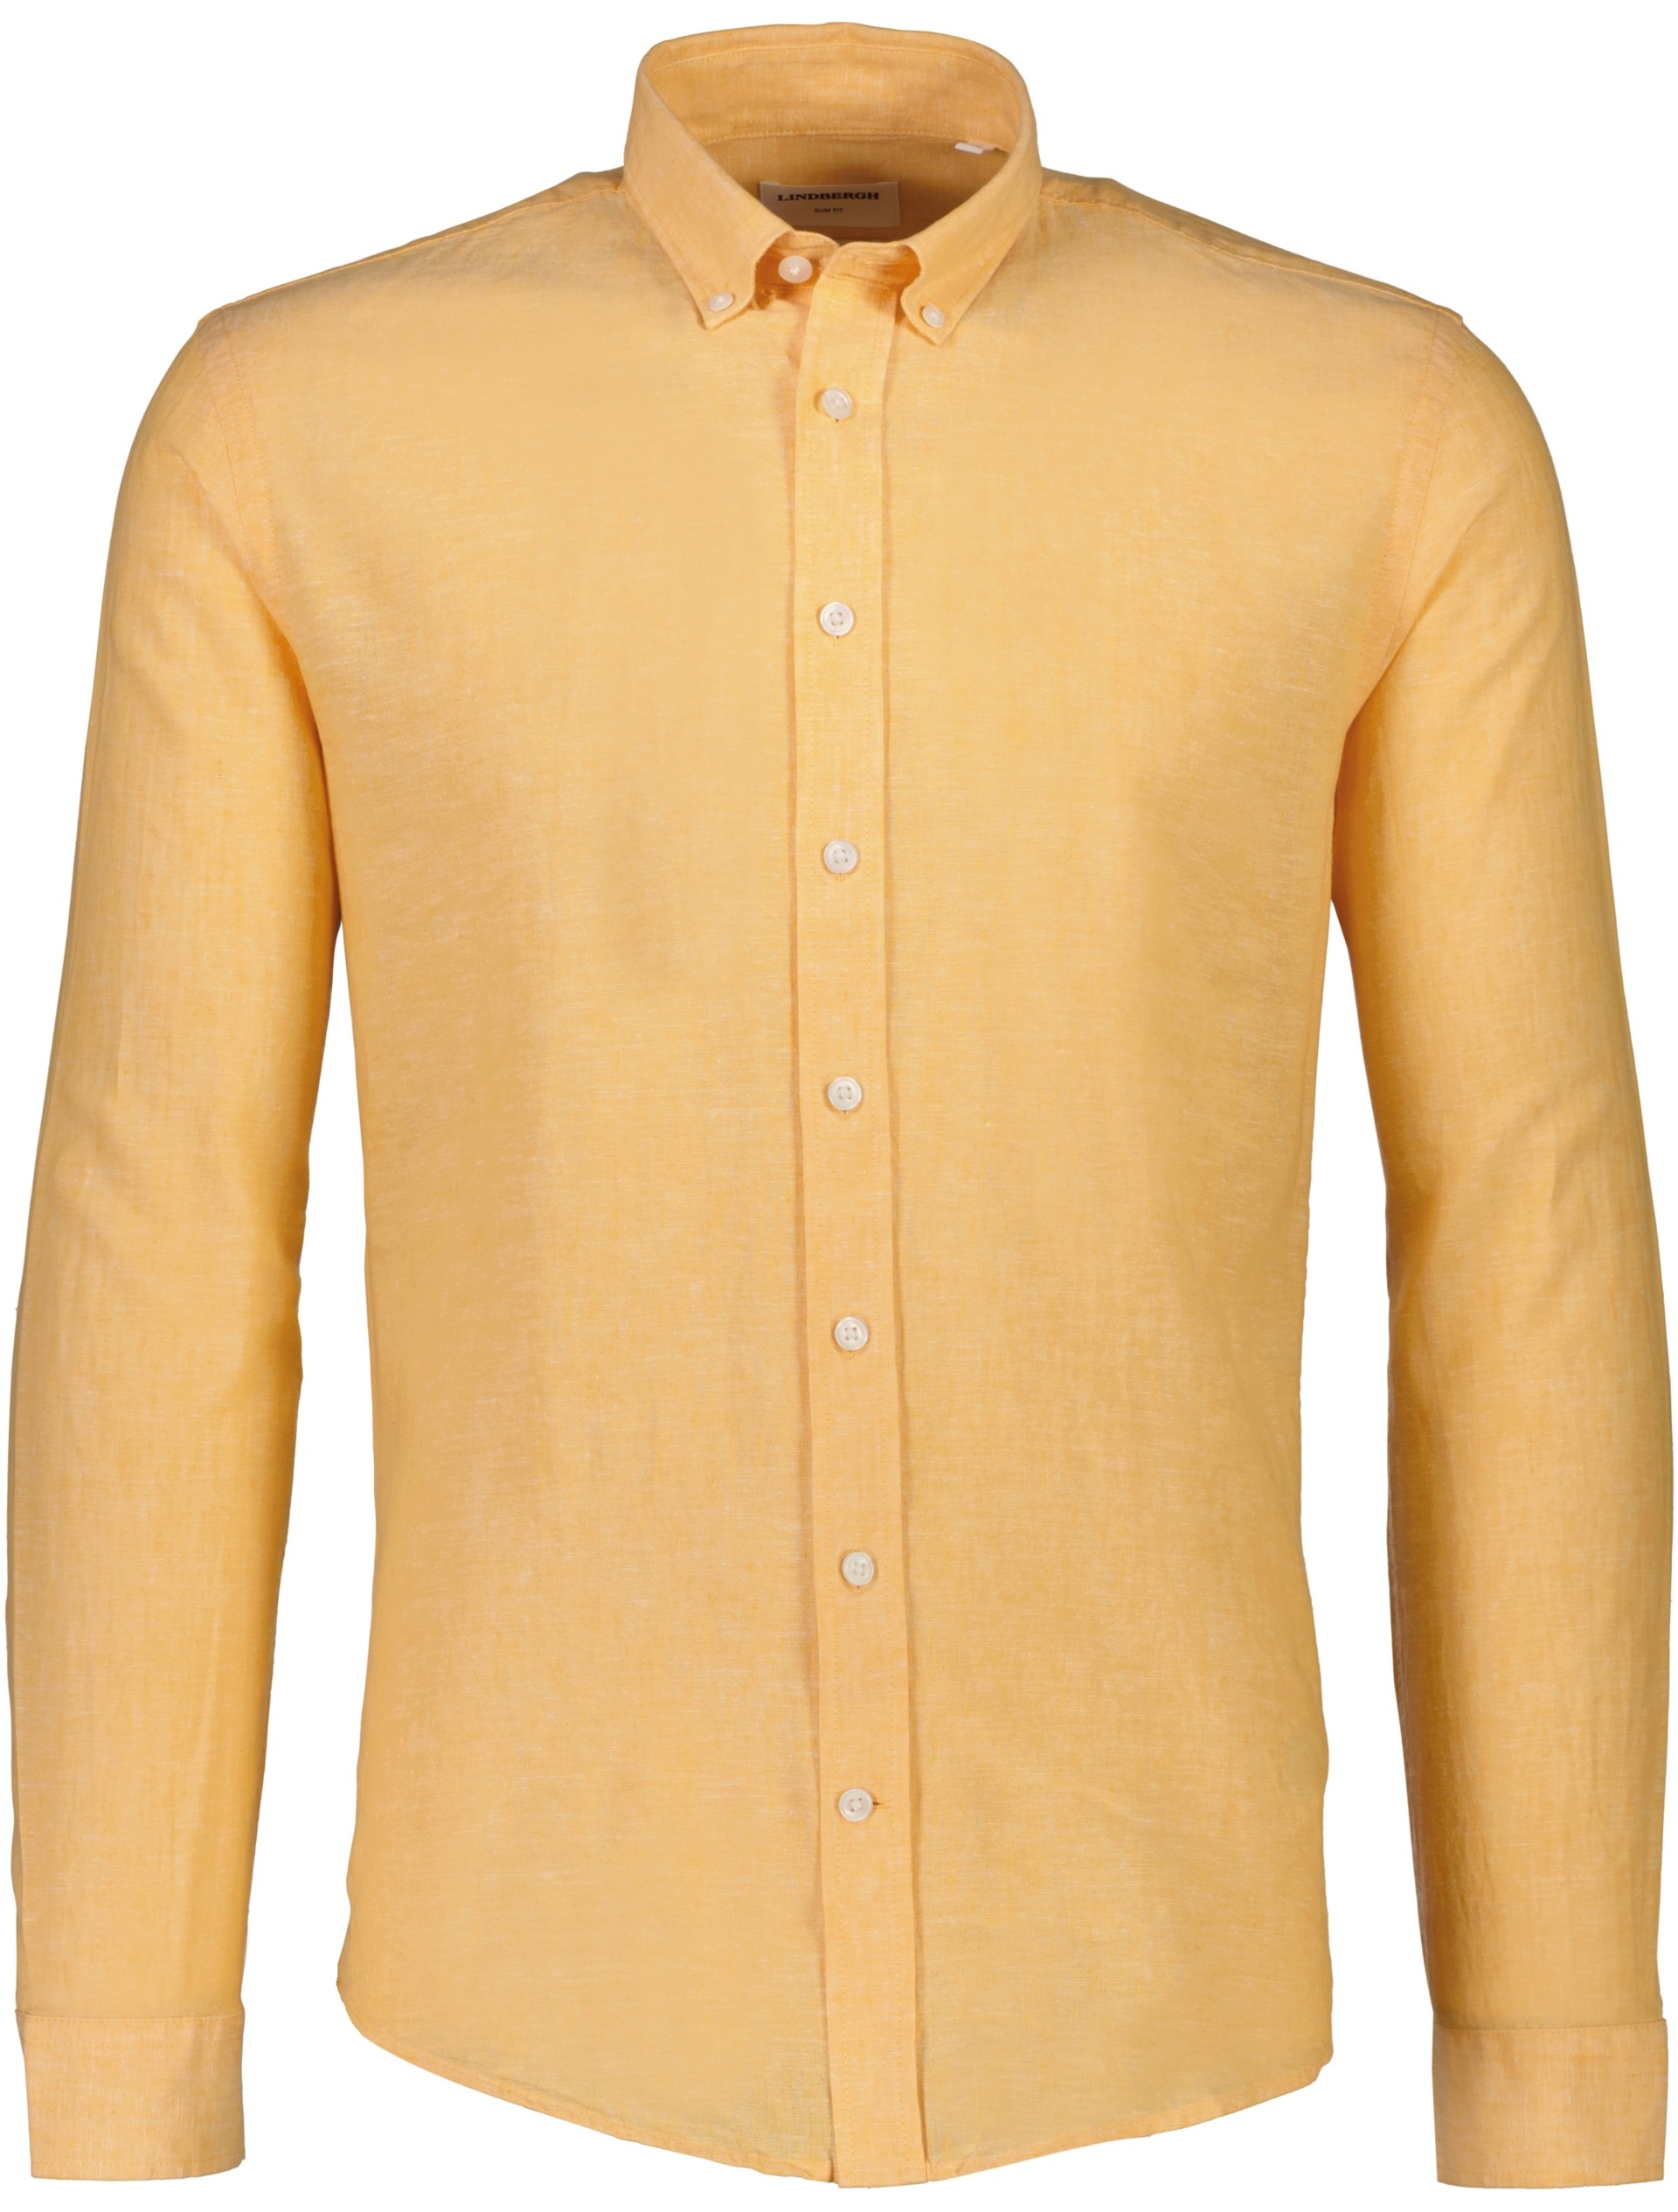 Lindbergh Linen shirt orange / lt orange